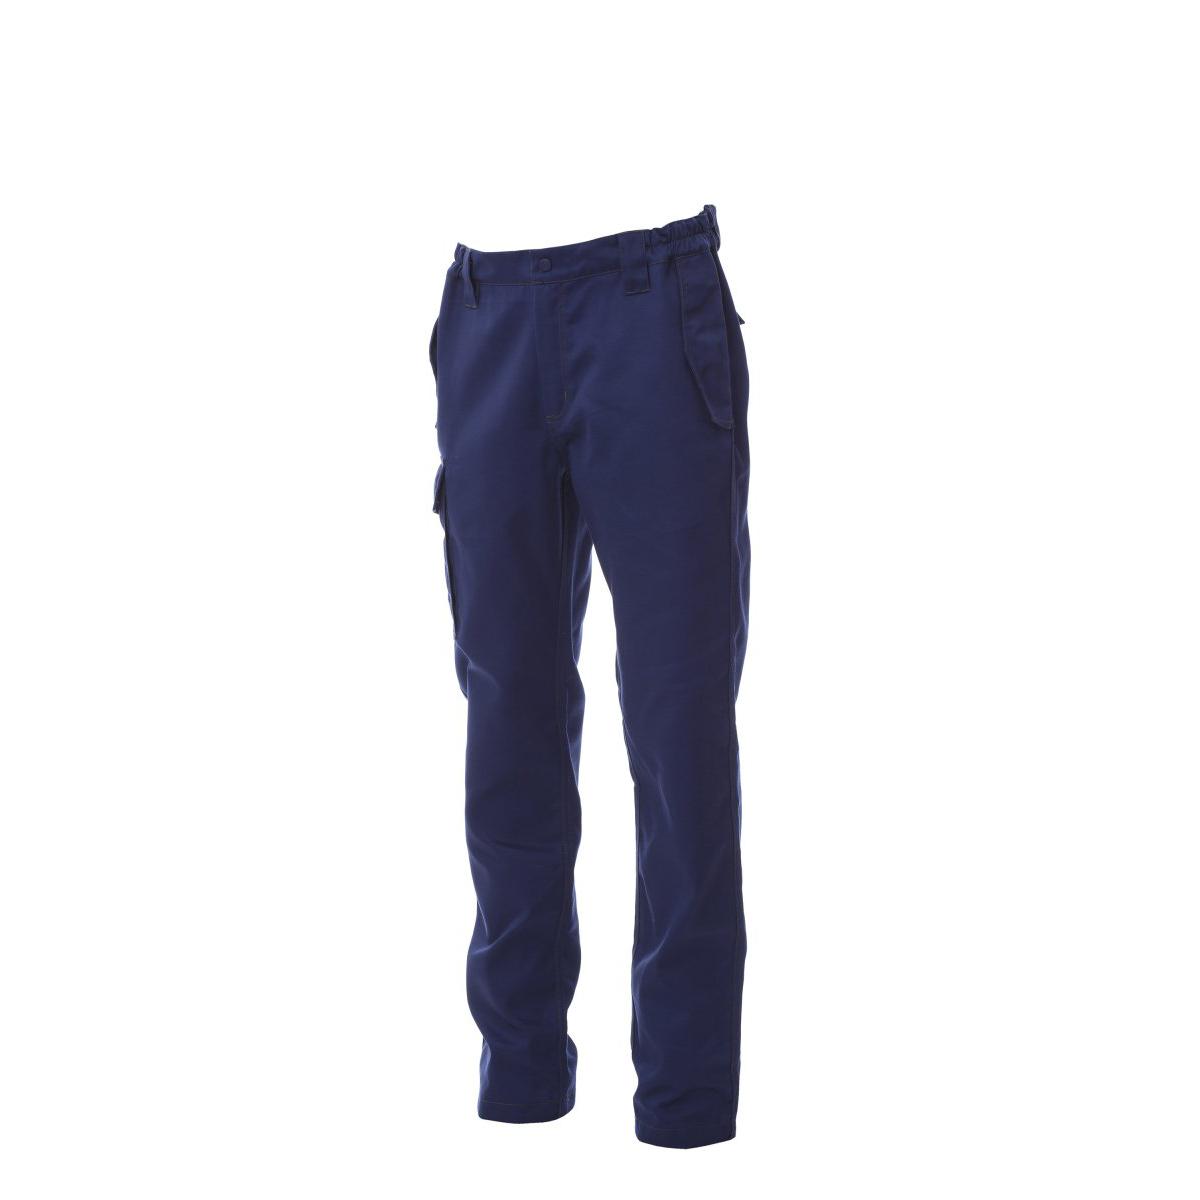 Pantaloni Protection 2.0 001488 Payper, ideale per saldatori